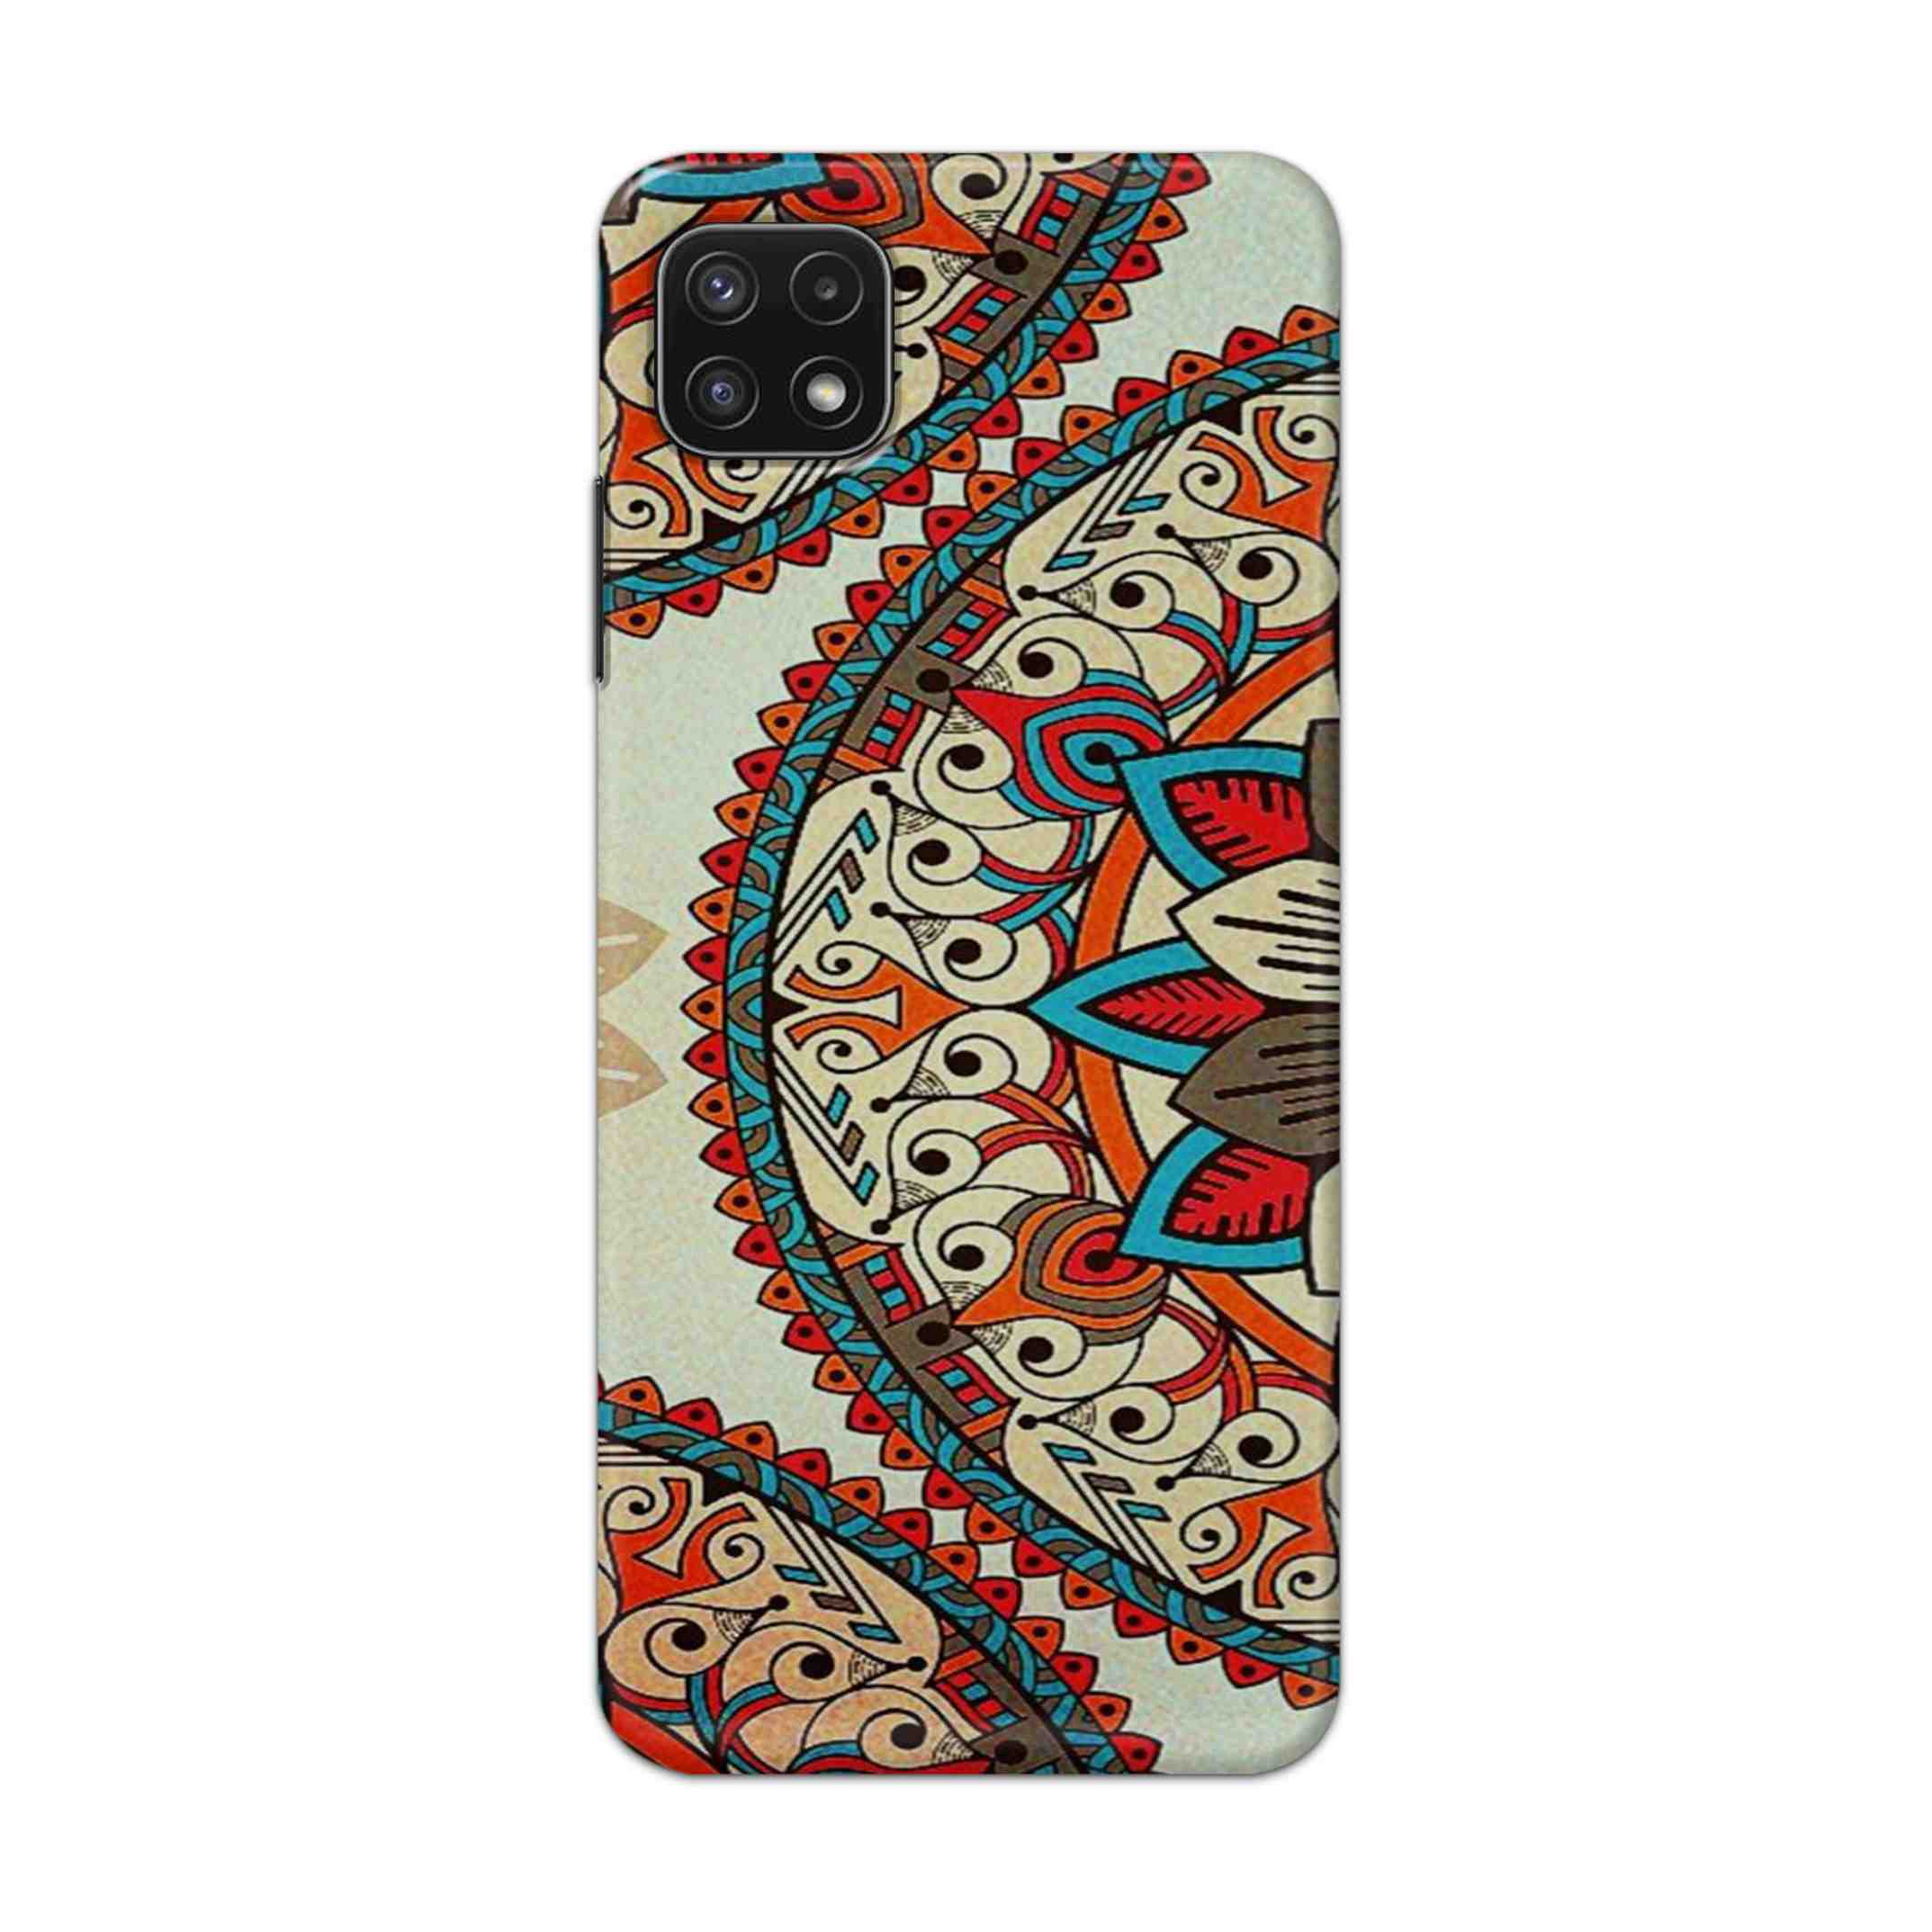 Buy Aztec Mandalas Hard Back Mobile Phone Case Cover For Samsung A22 5G Online